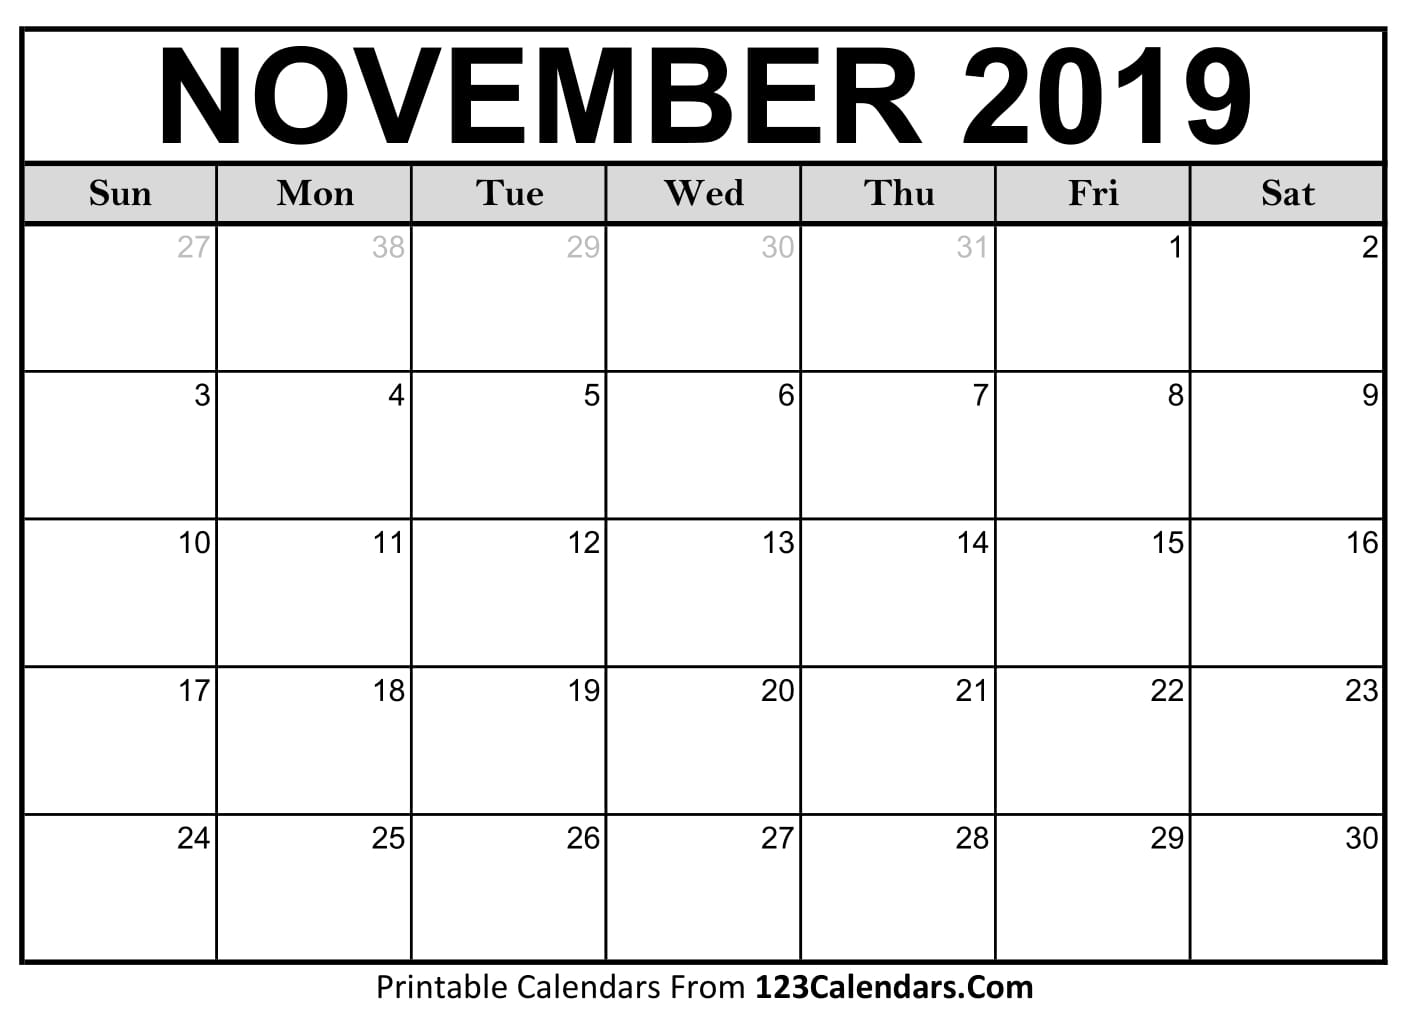 November 2019 Calendar (Blank) Easily Printable 123Calendars